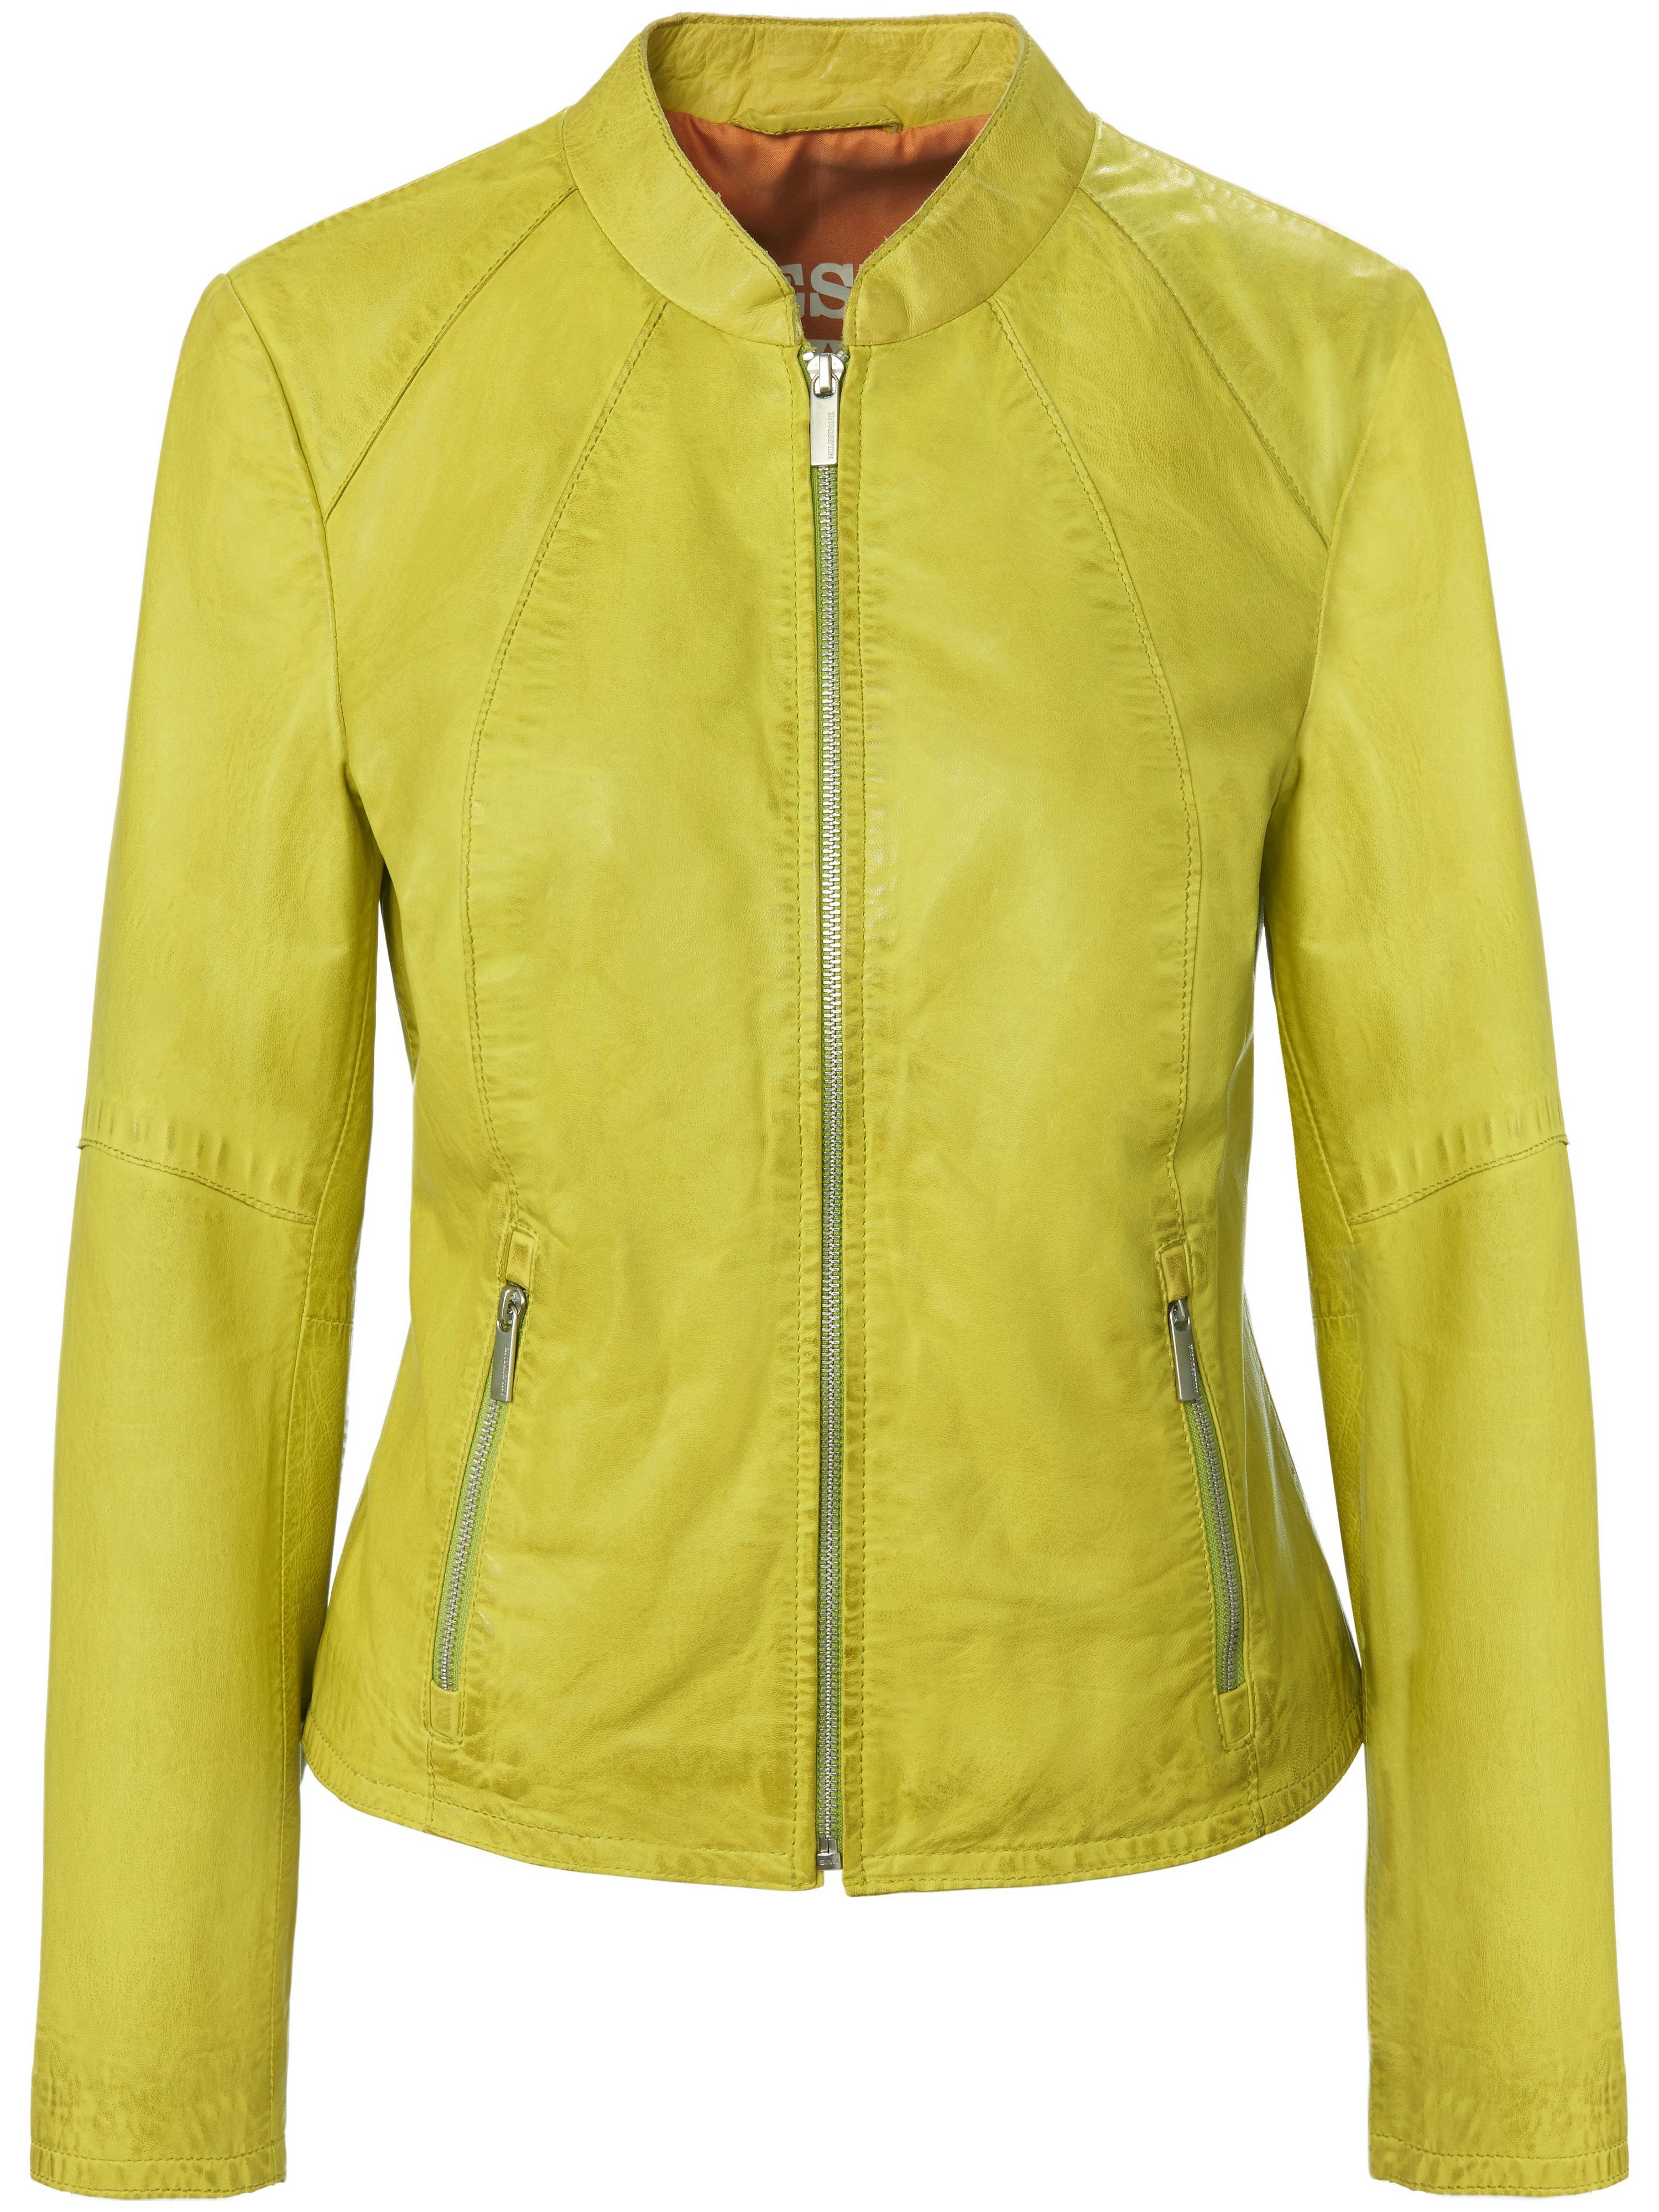 Leather jacket Milestone yellow